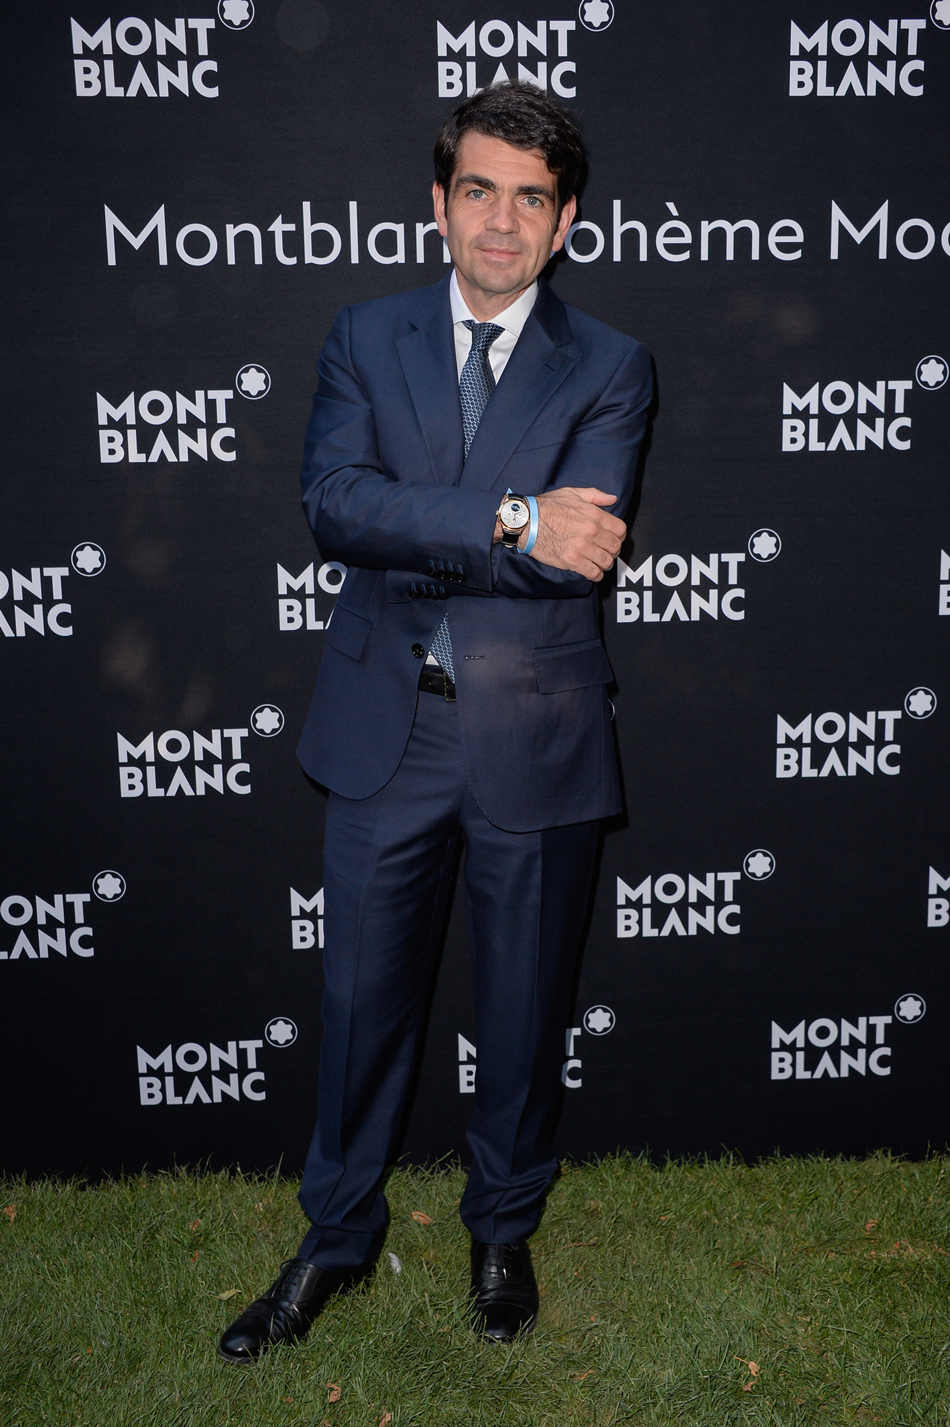 1Montblanc-CEO-Jerome-Lambert-attends-Montblanc-Boheme.jpg